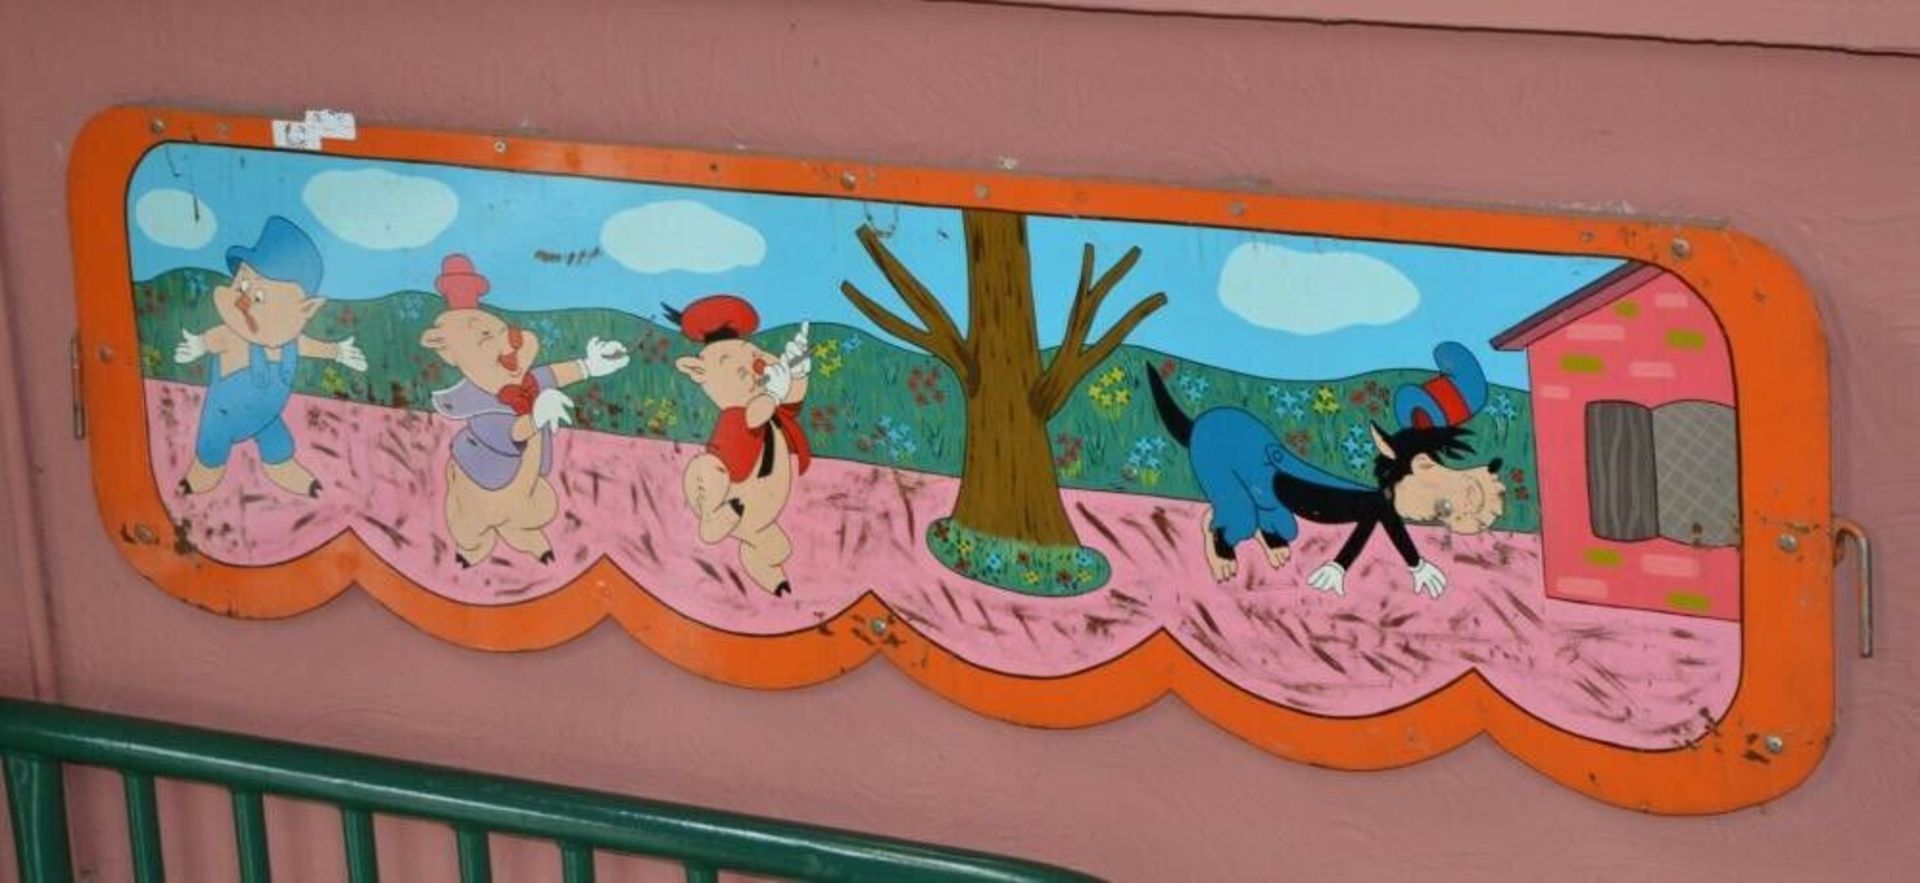 7 x Vintage Fairground Ride Fence Panels - Hand Painted Disneyland Artwork - With Braced Backs and